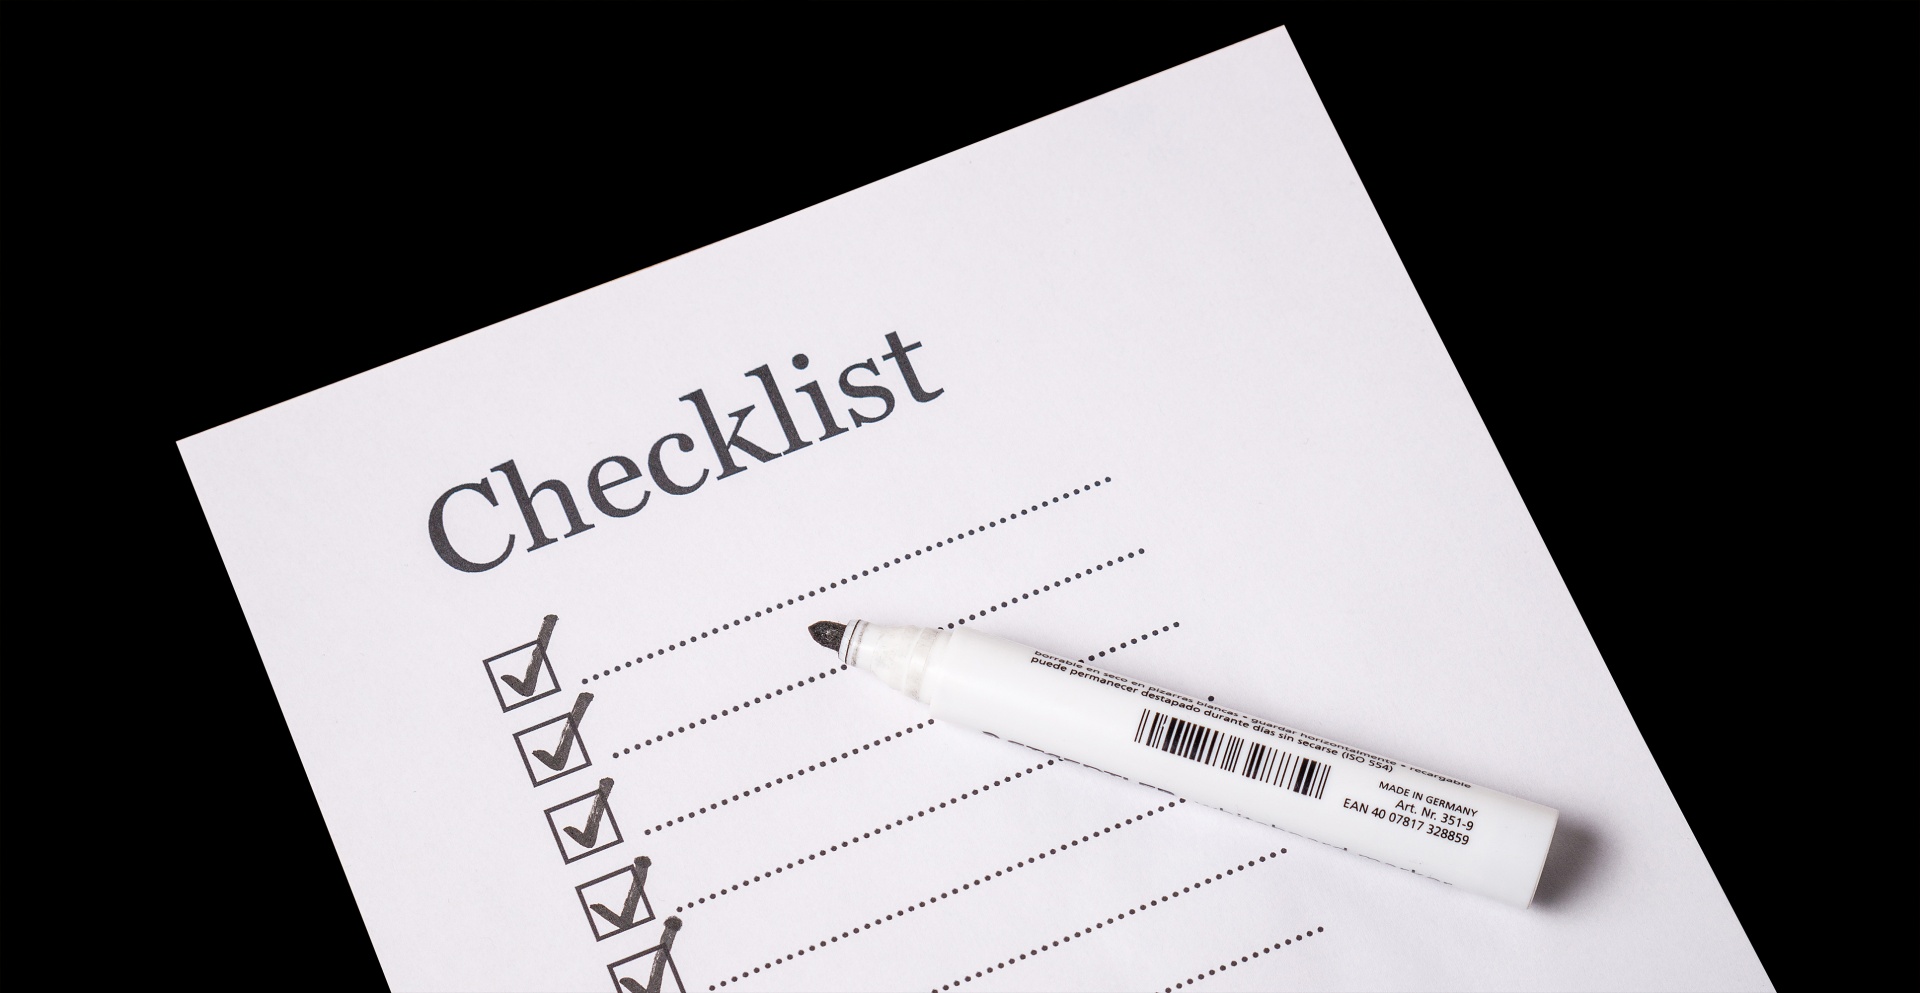 Checklist with pen